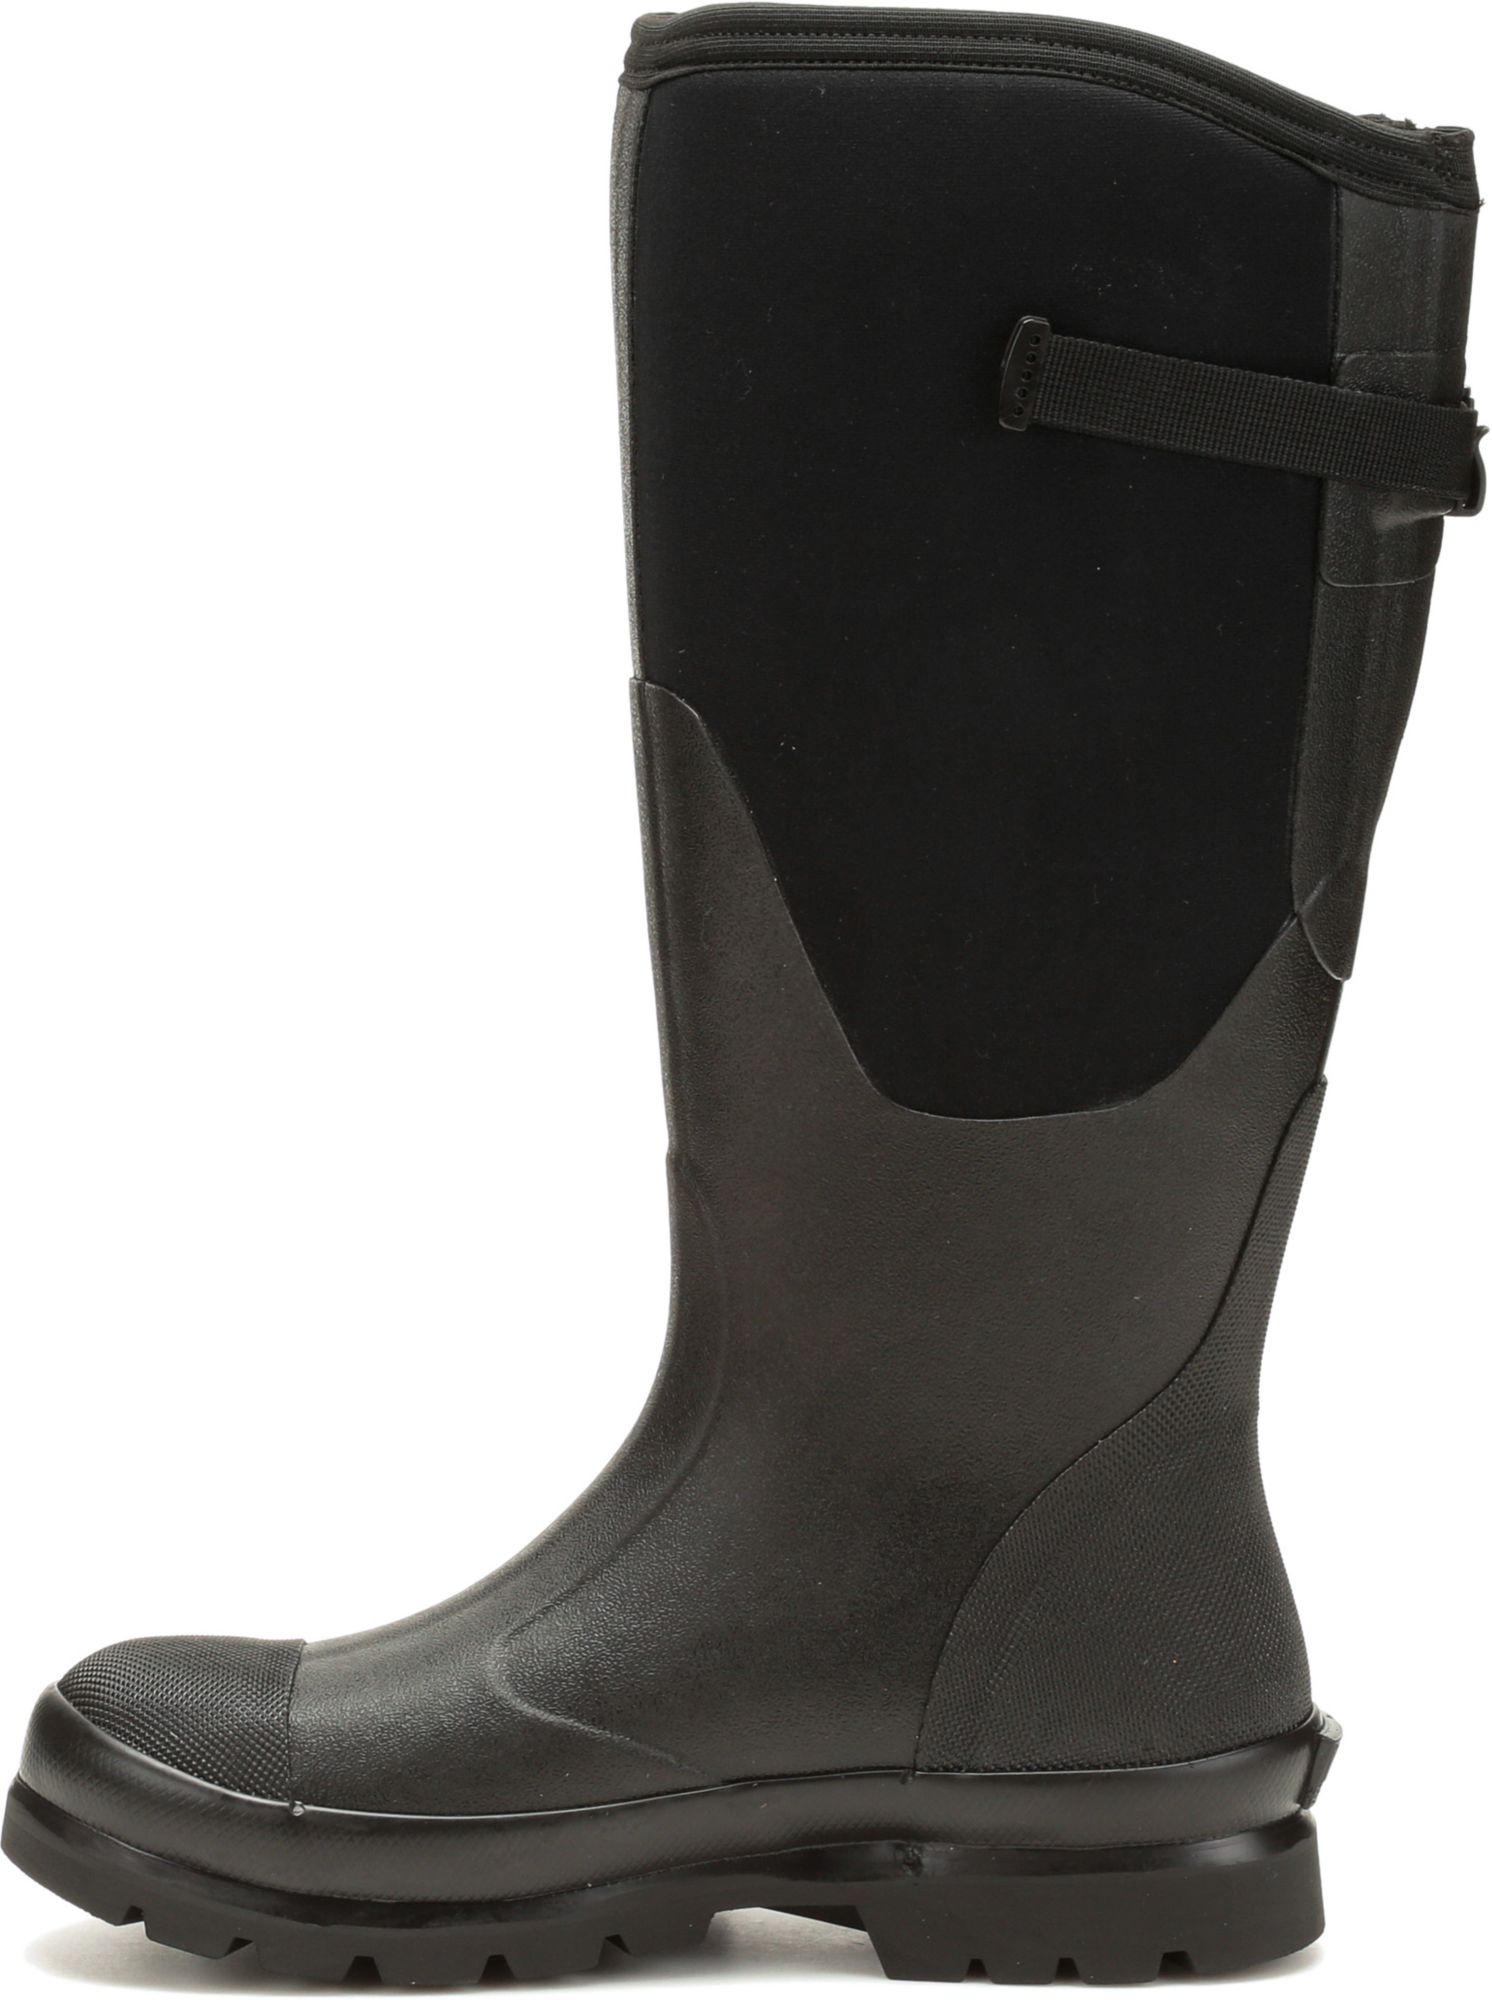 women's chore adjustable tall boots